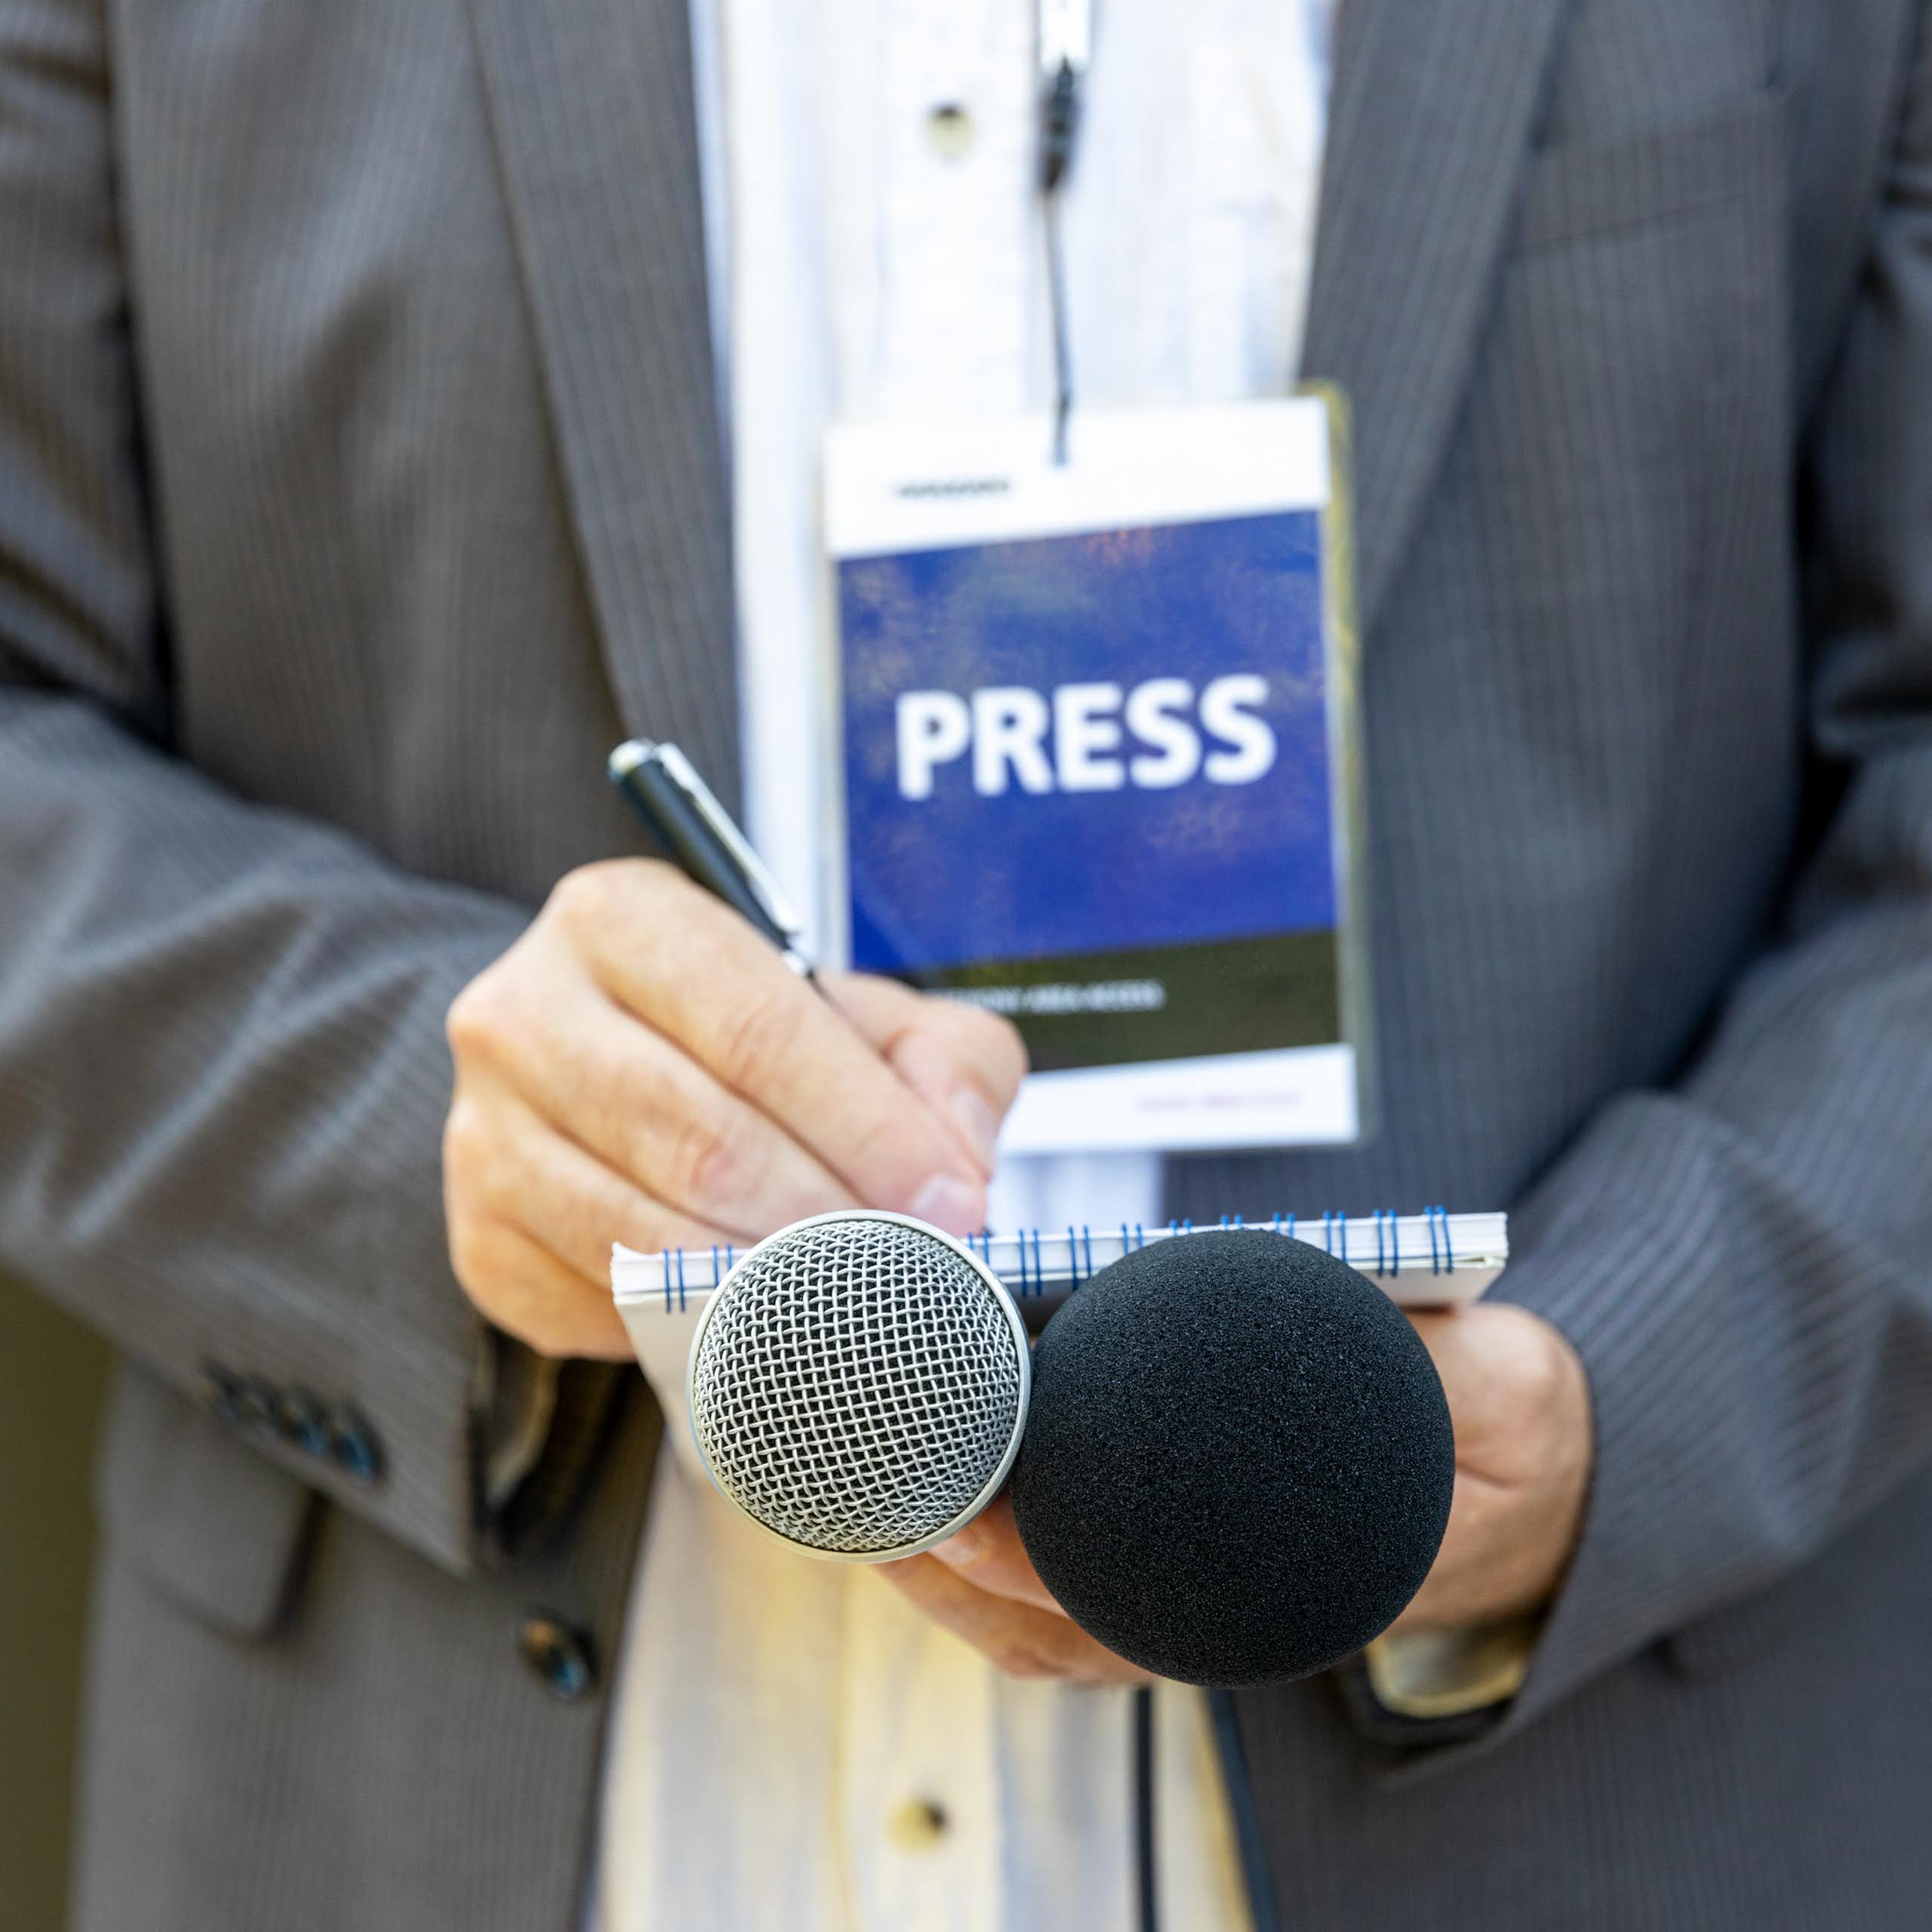 Beban kerja besar, finansial rentan: riset temukan 3 dilema profesi jurnalis